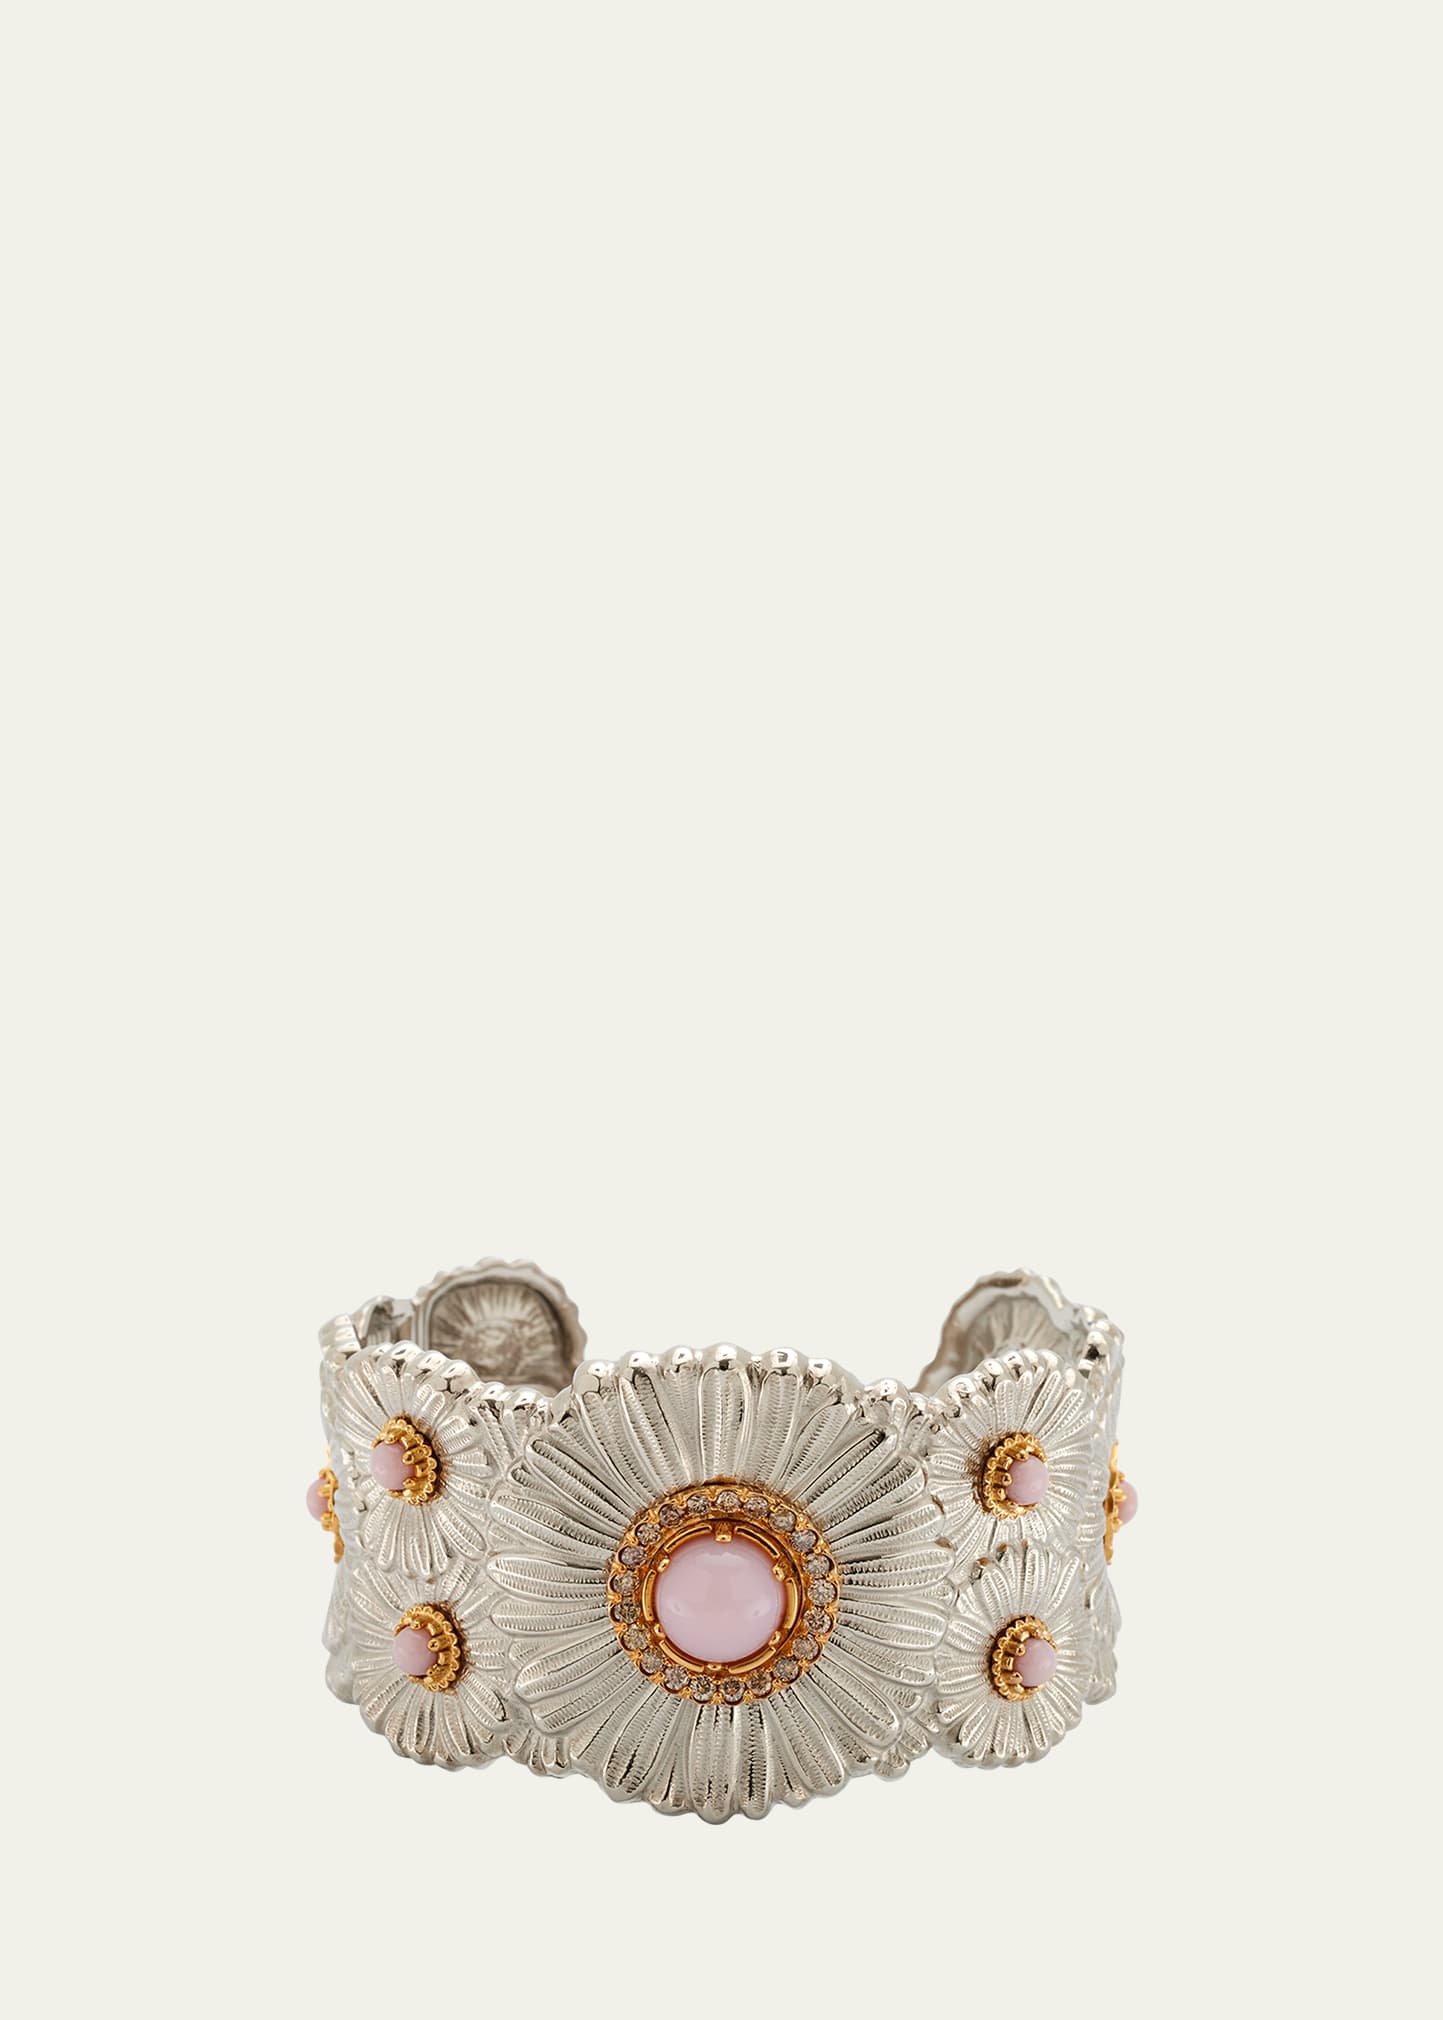 Daisy Cuff Bracelet with Pink Opal